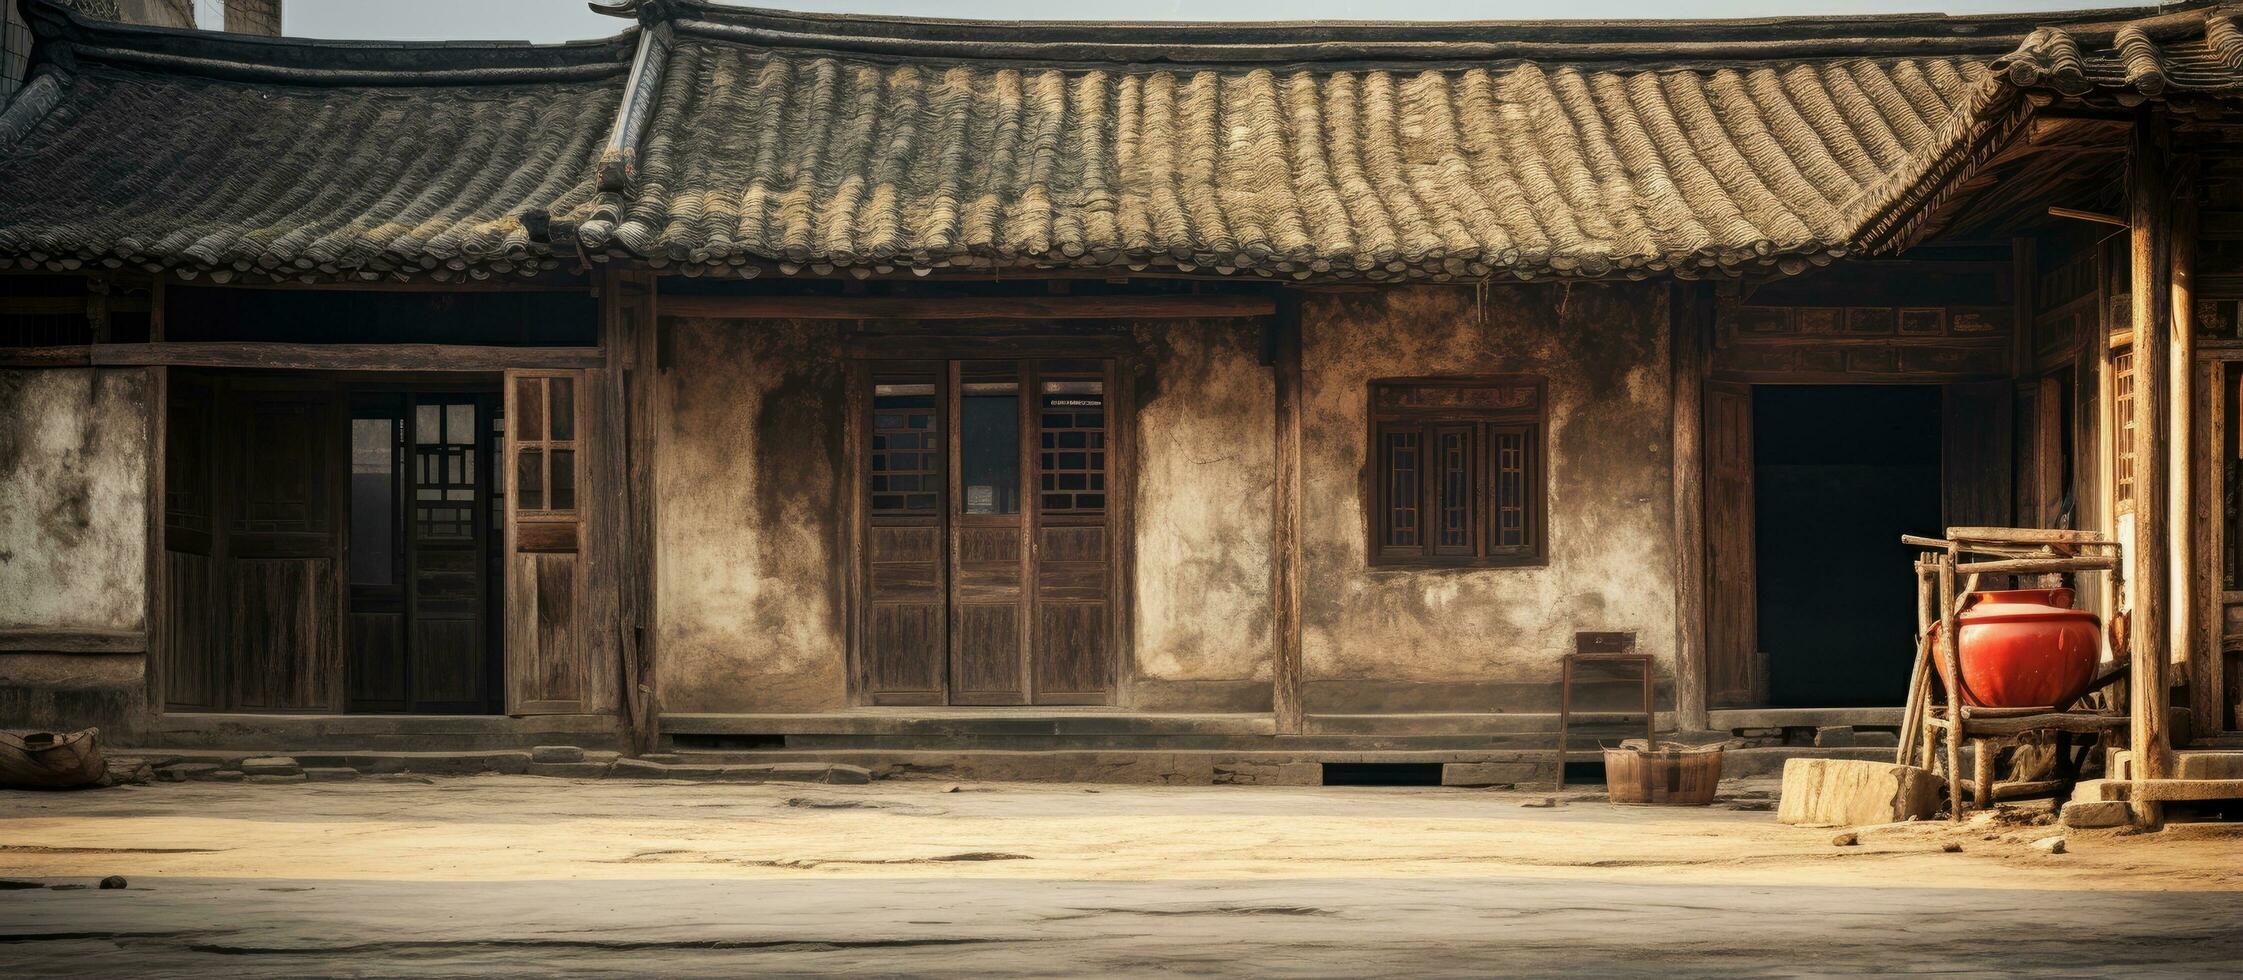 antiguo chino vivienda foto